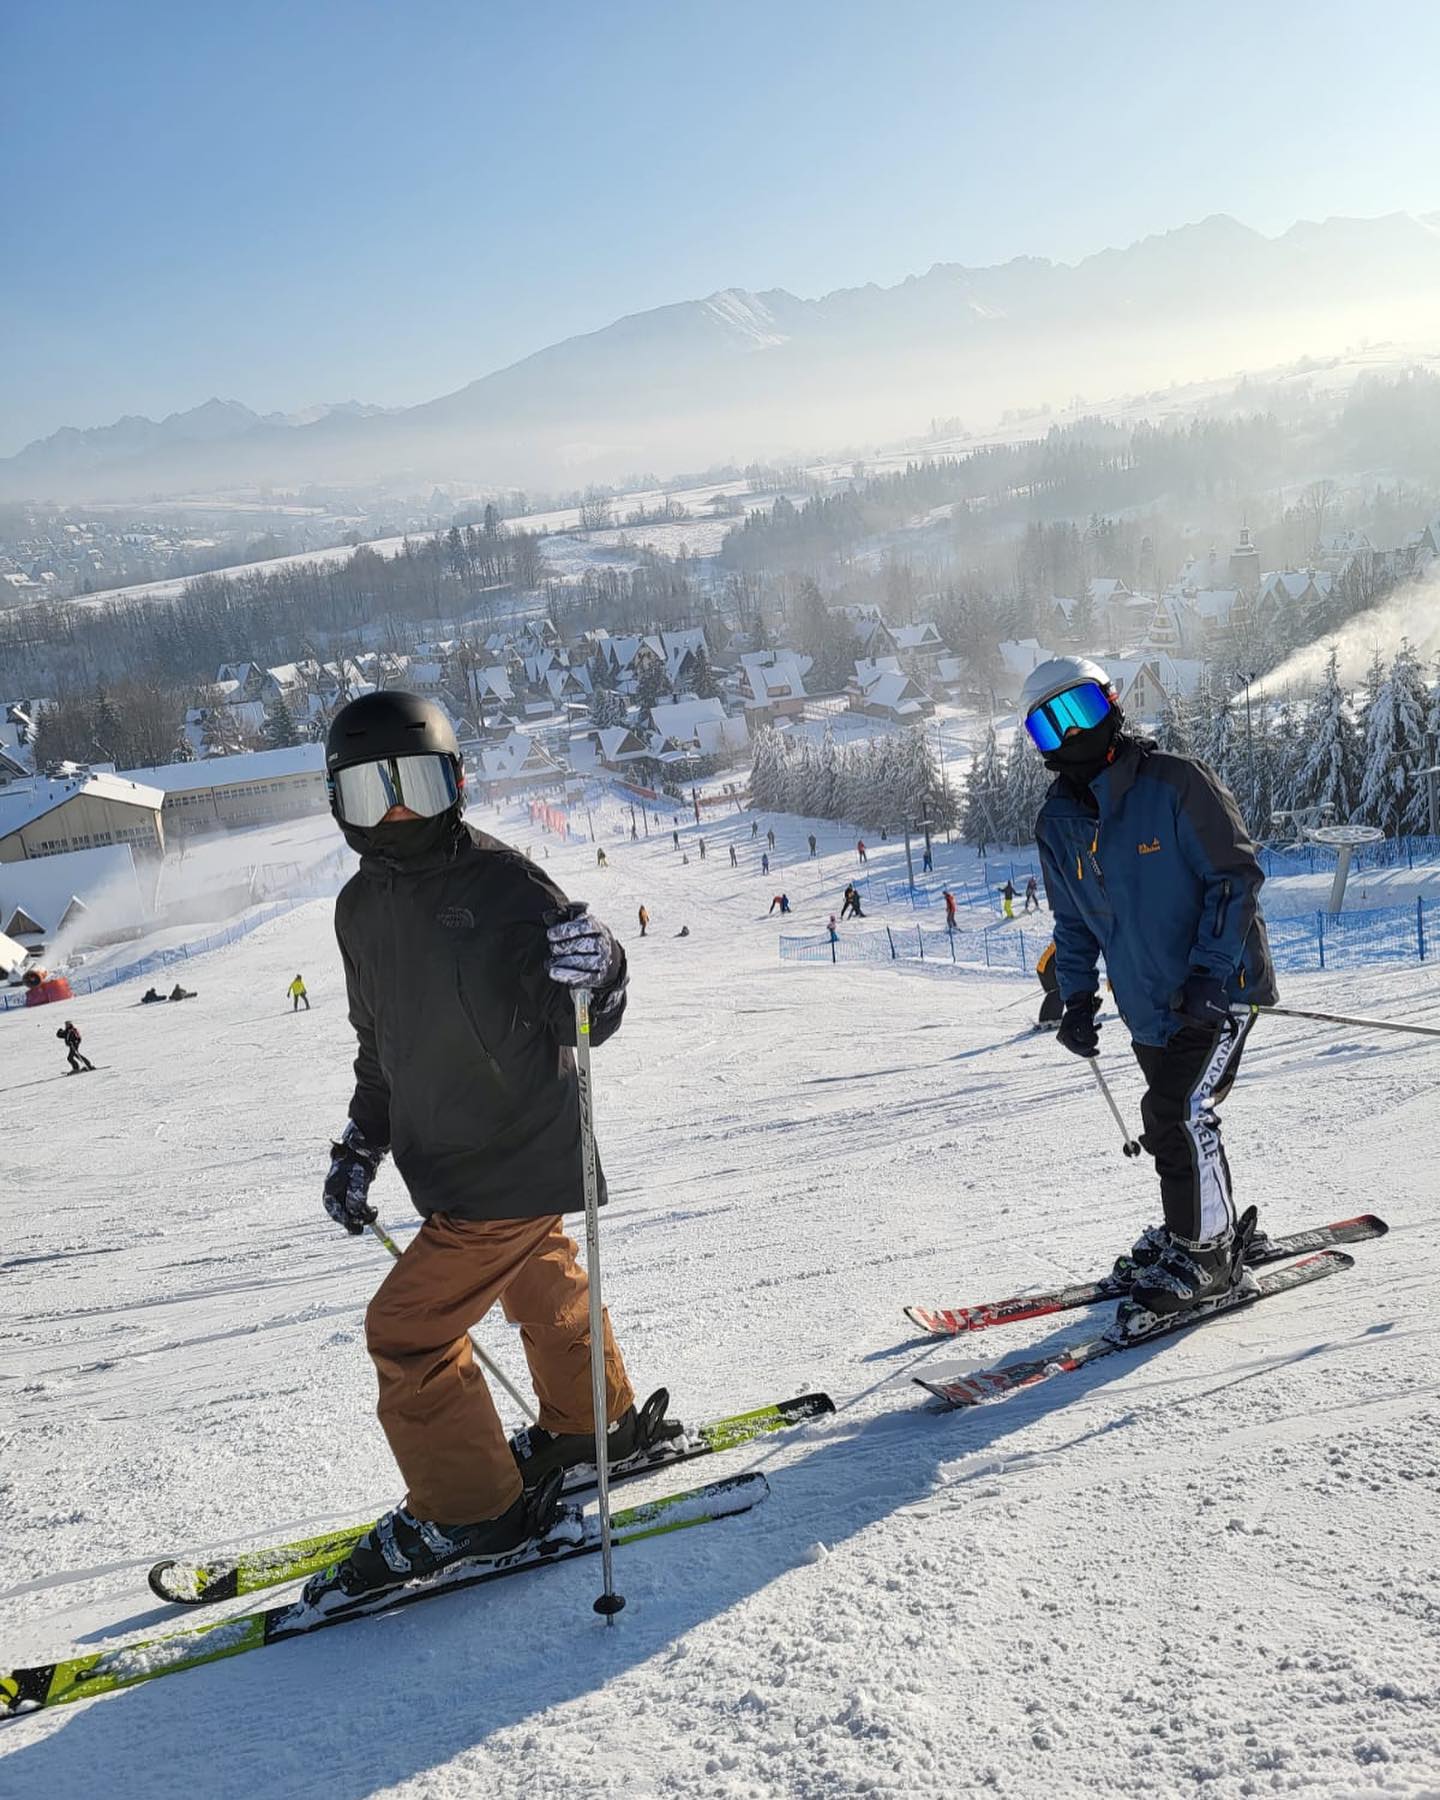 Harenda Ski Station ❄️⛷❄️, there are ski lifts for beginners, intermediate & advanced skiers